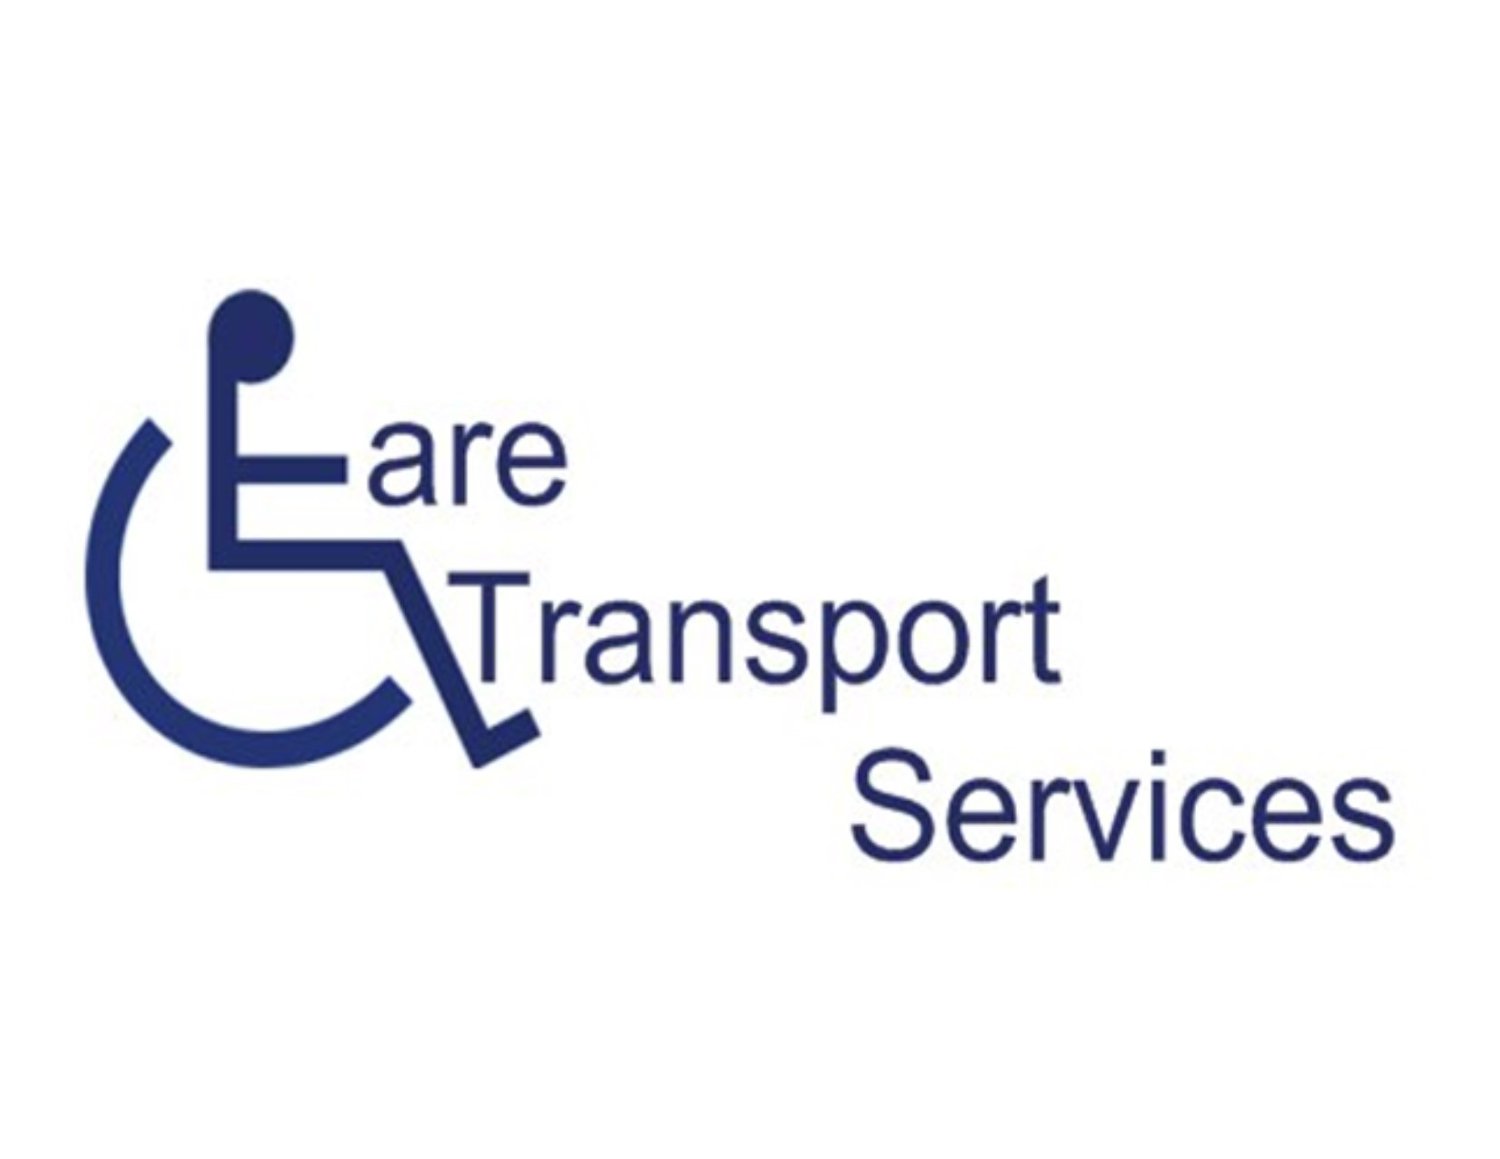 Care Transport Services